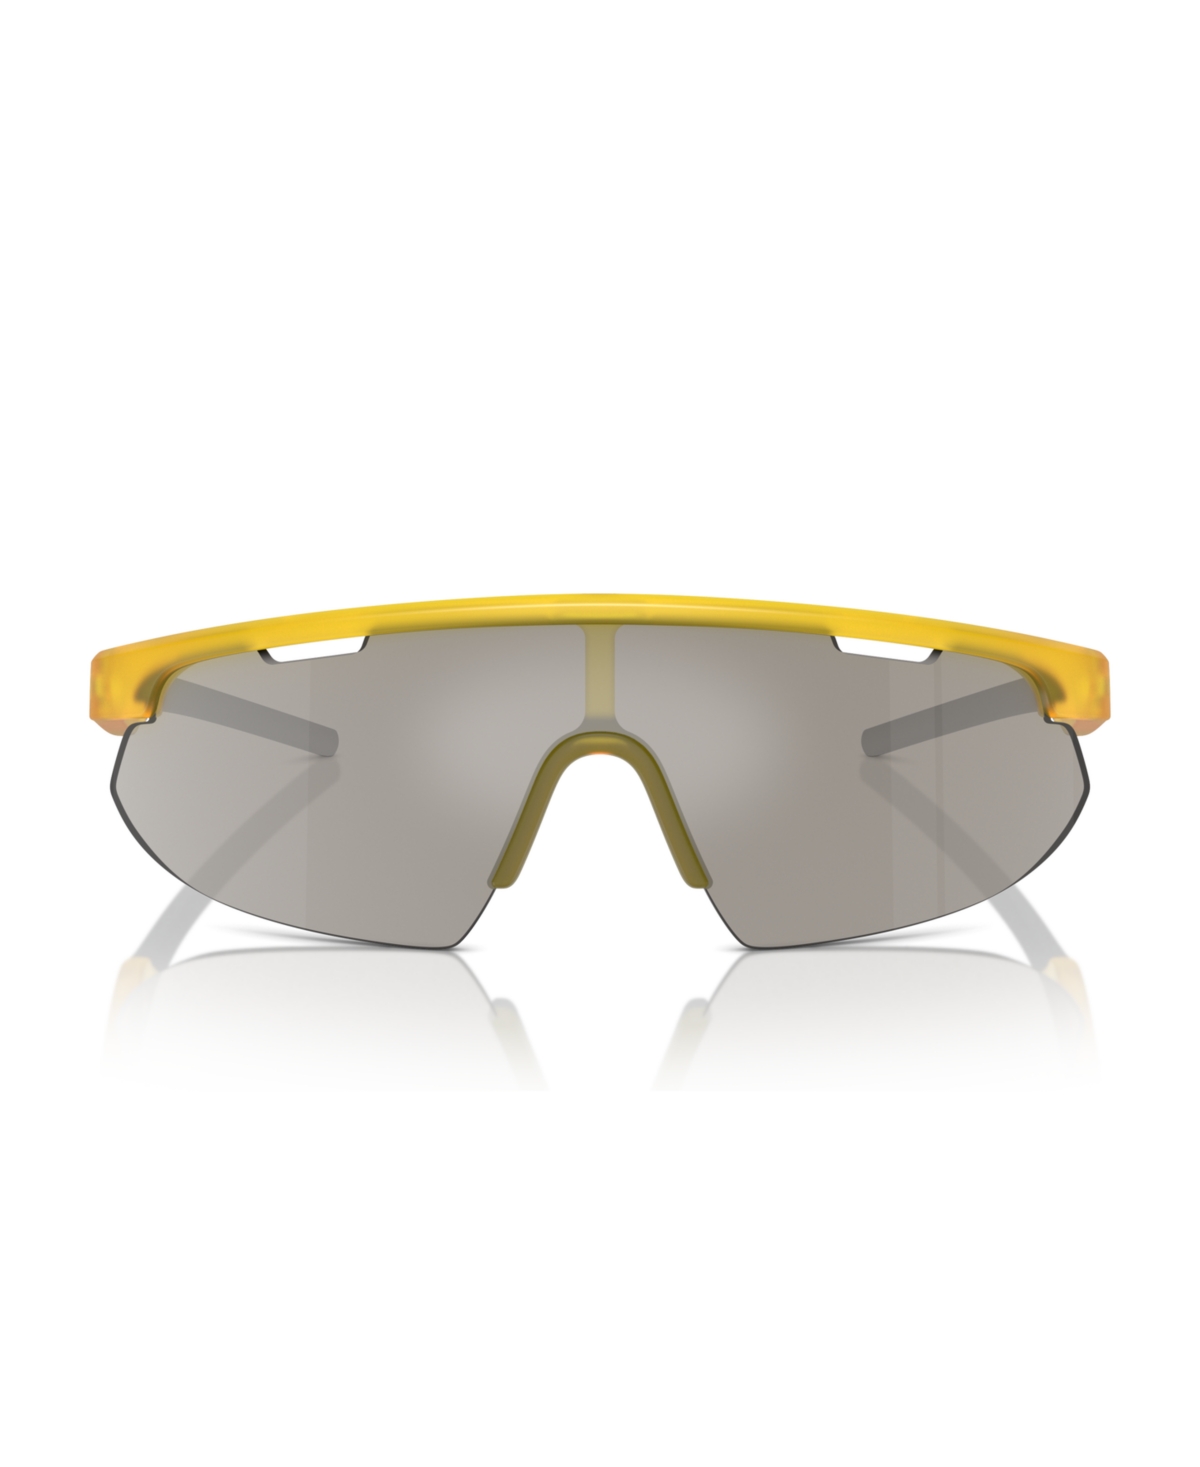 Scuderia Ferrari Unisex Sunglasses, FZ6004U - Opal Matte Yellow